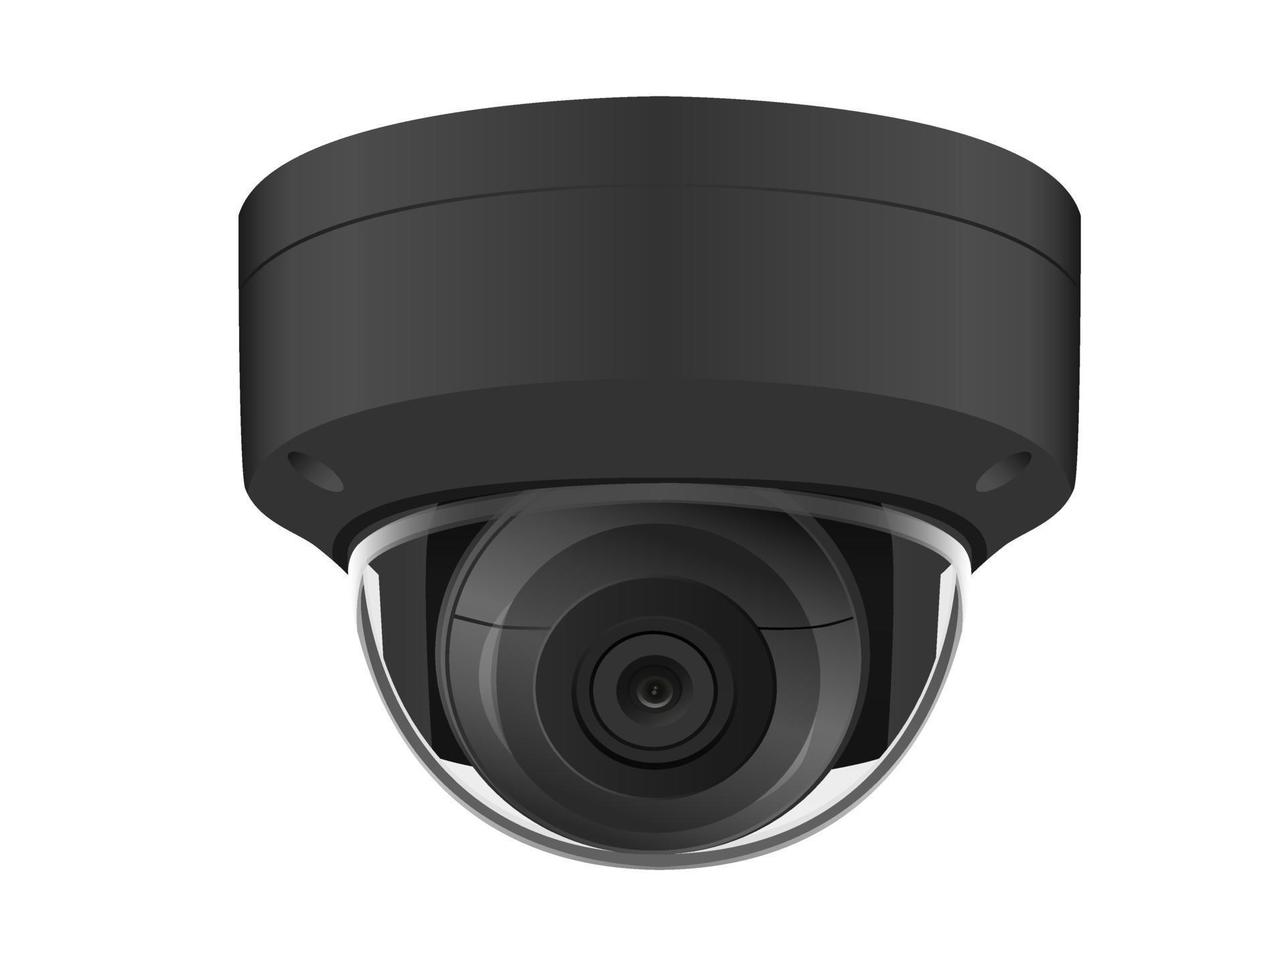 Black round CCTV camera on a white background vector